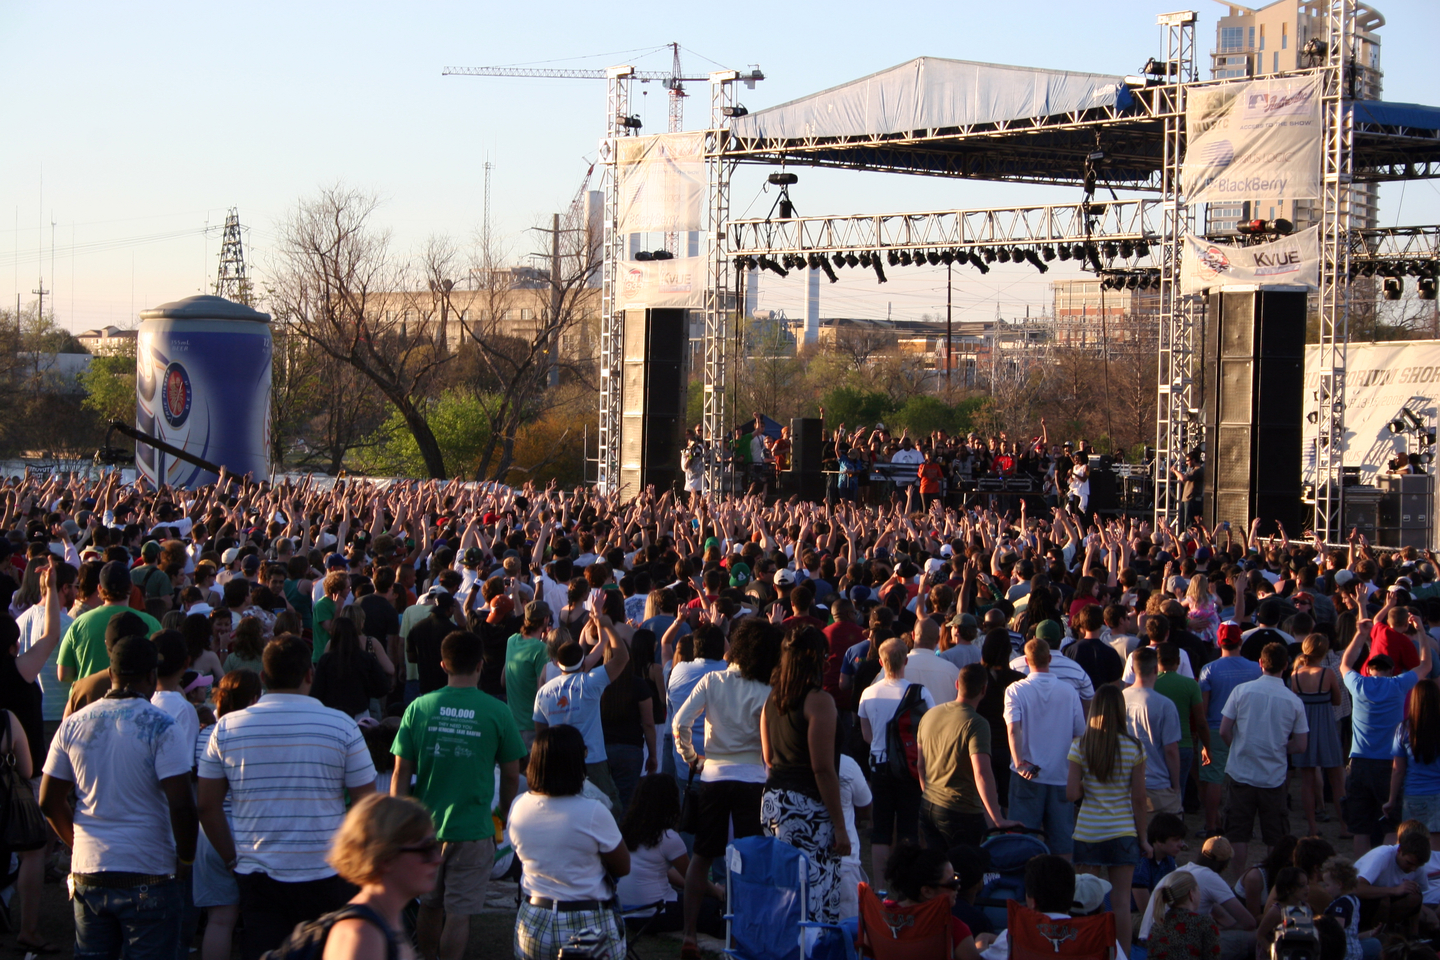 2008 crowd. Photo by Daniel Lewis